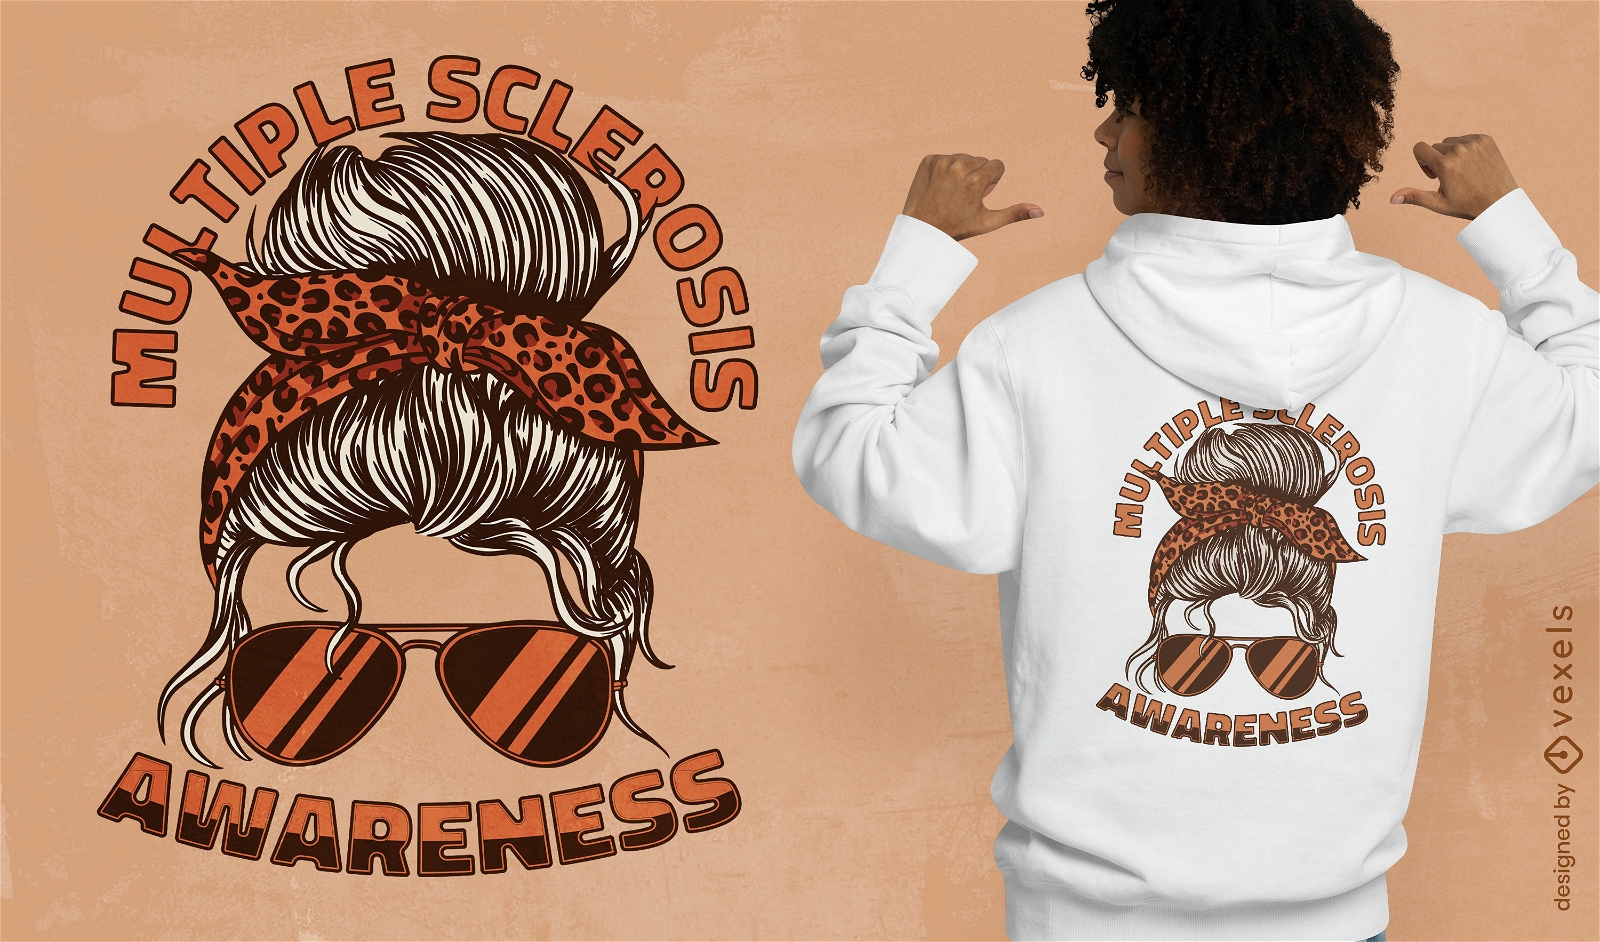 Multiple sclerosis awareness t-shirt design 